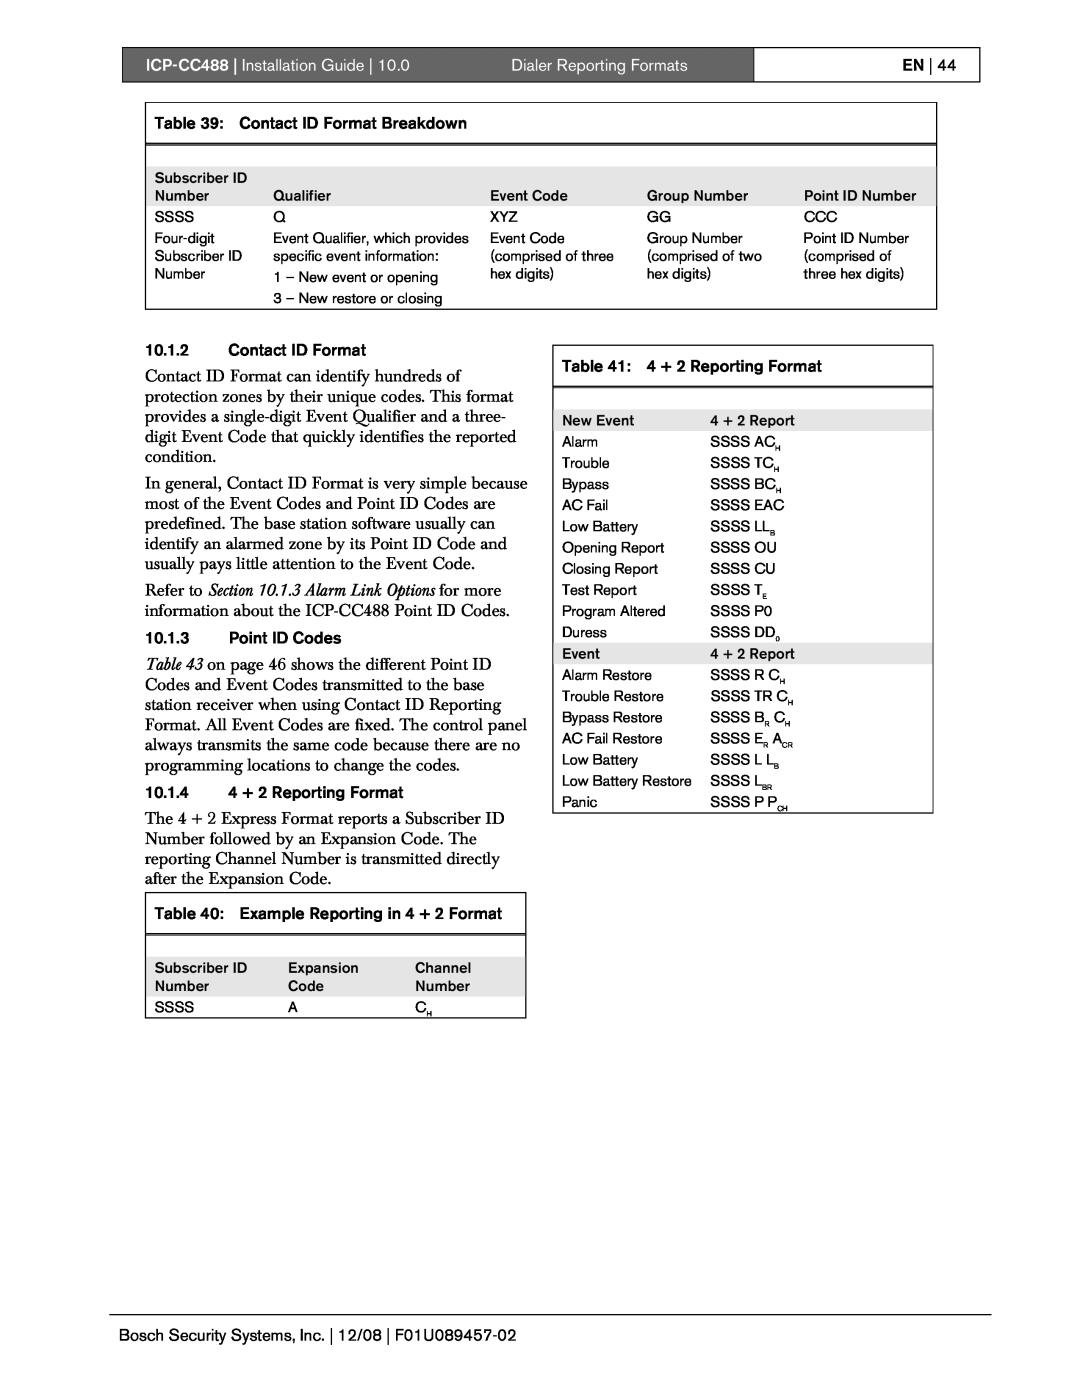 Bosch Appliances manual ICP-CC488| Installation Guide, Dialer Reporting Formats, En, Contact ID Format Breakdown 